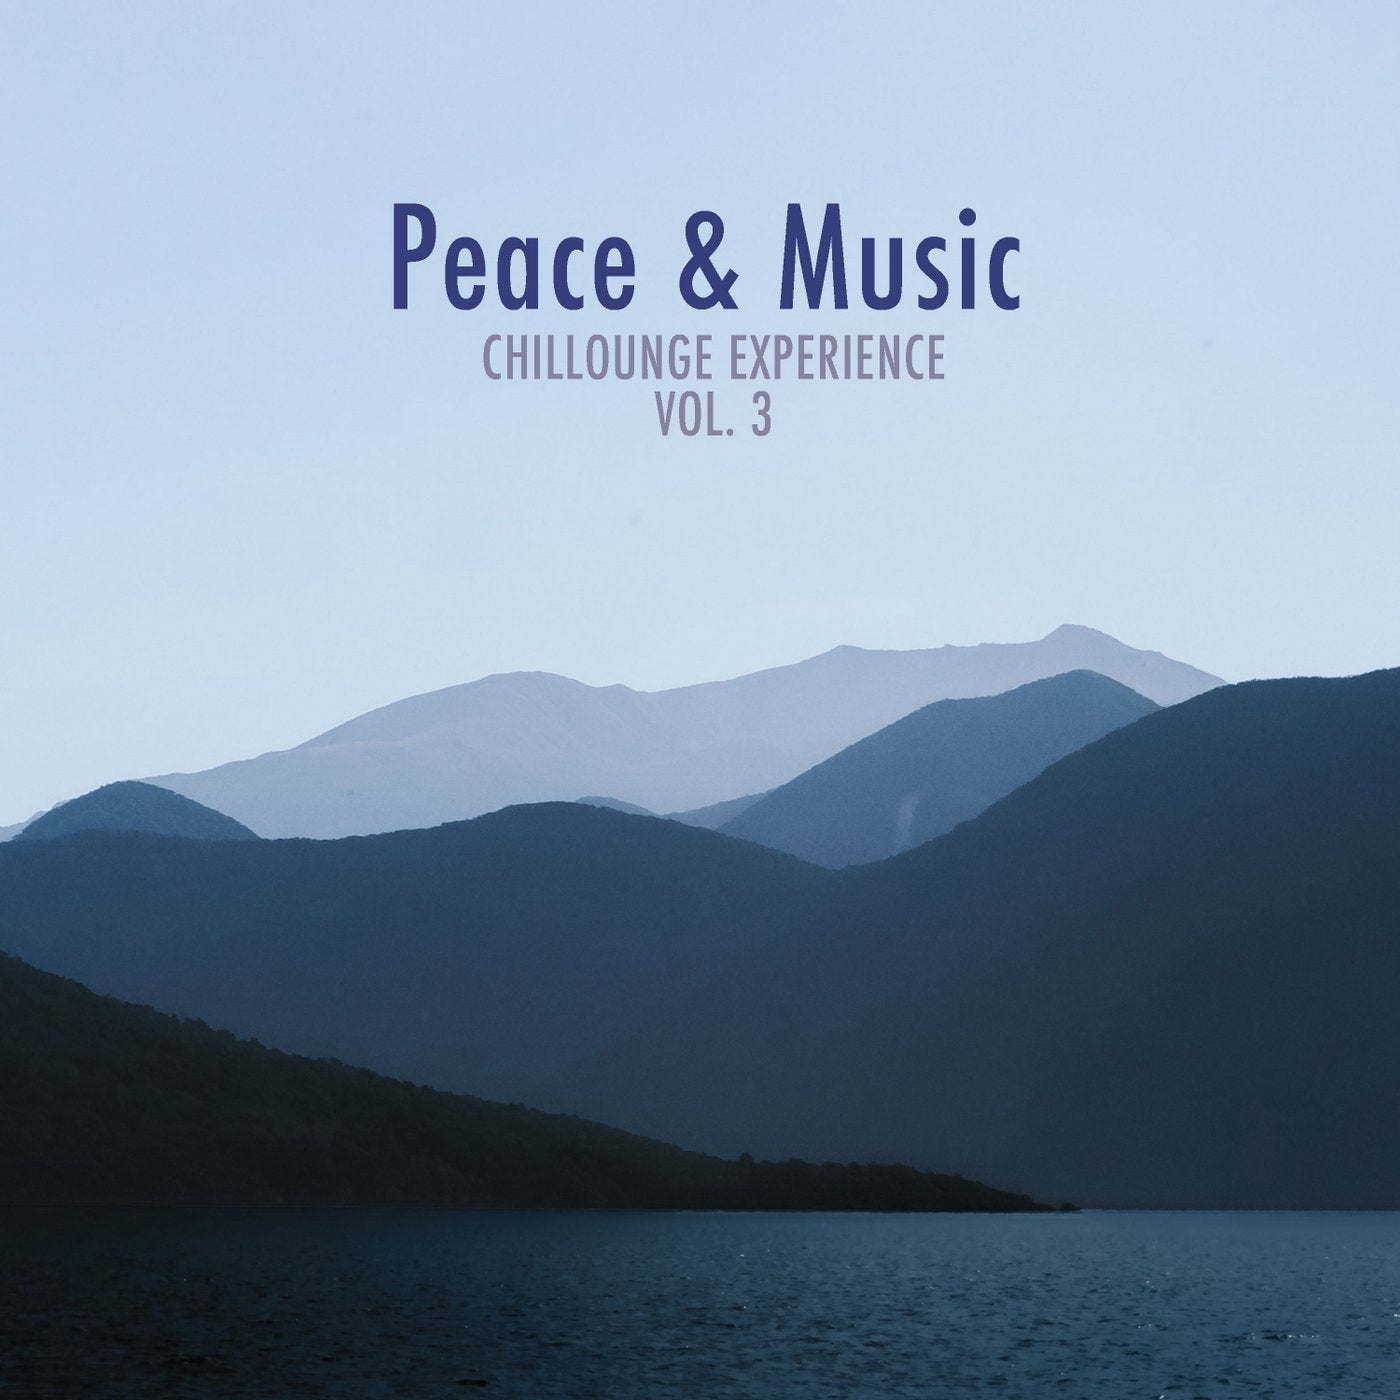 Peace & Music, Vol. 3